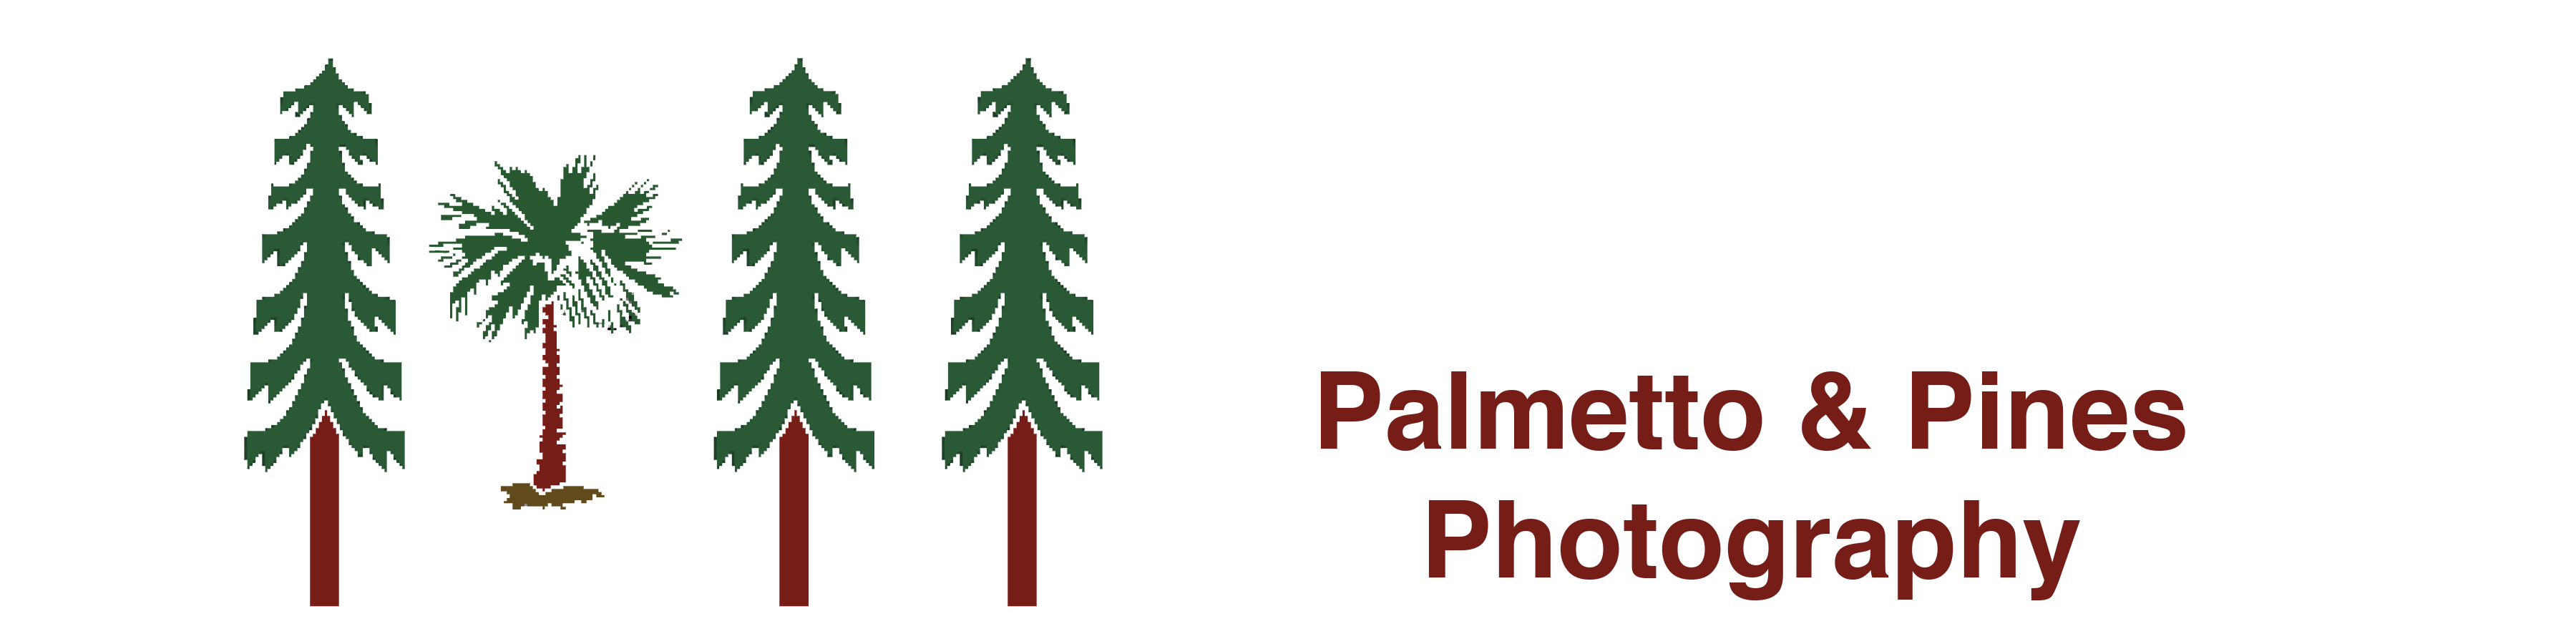 Palmetto & Pines Photography